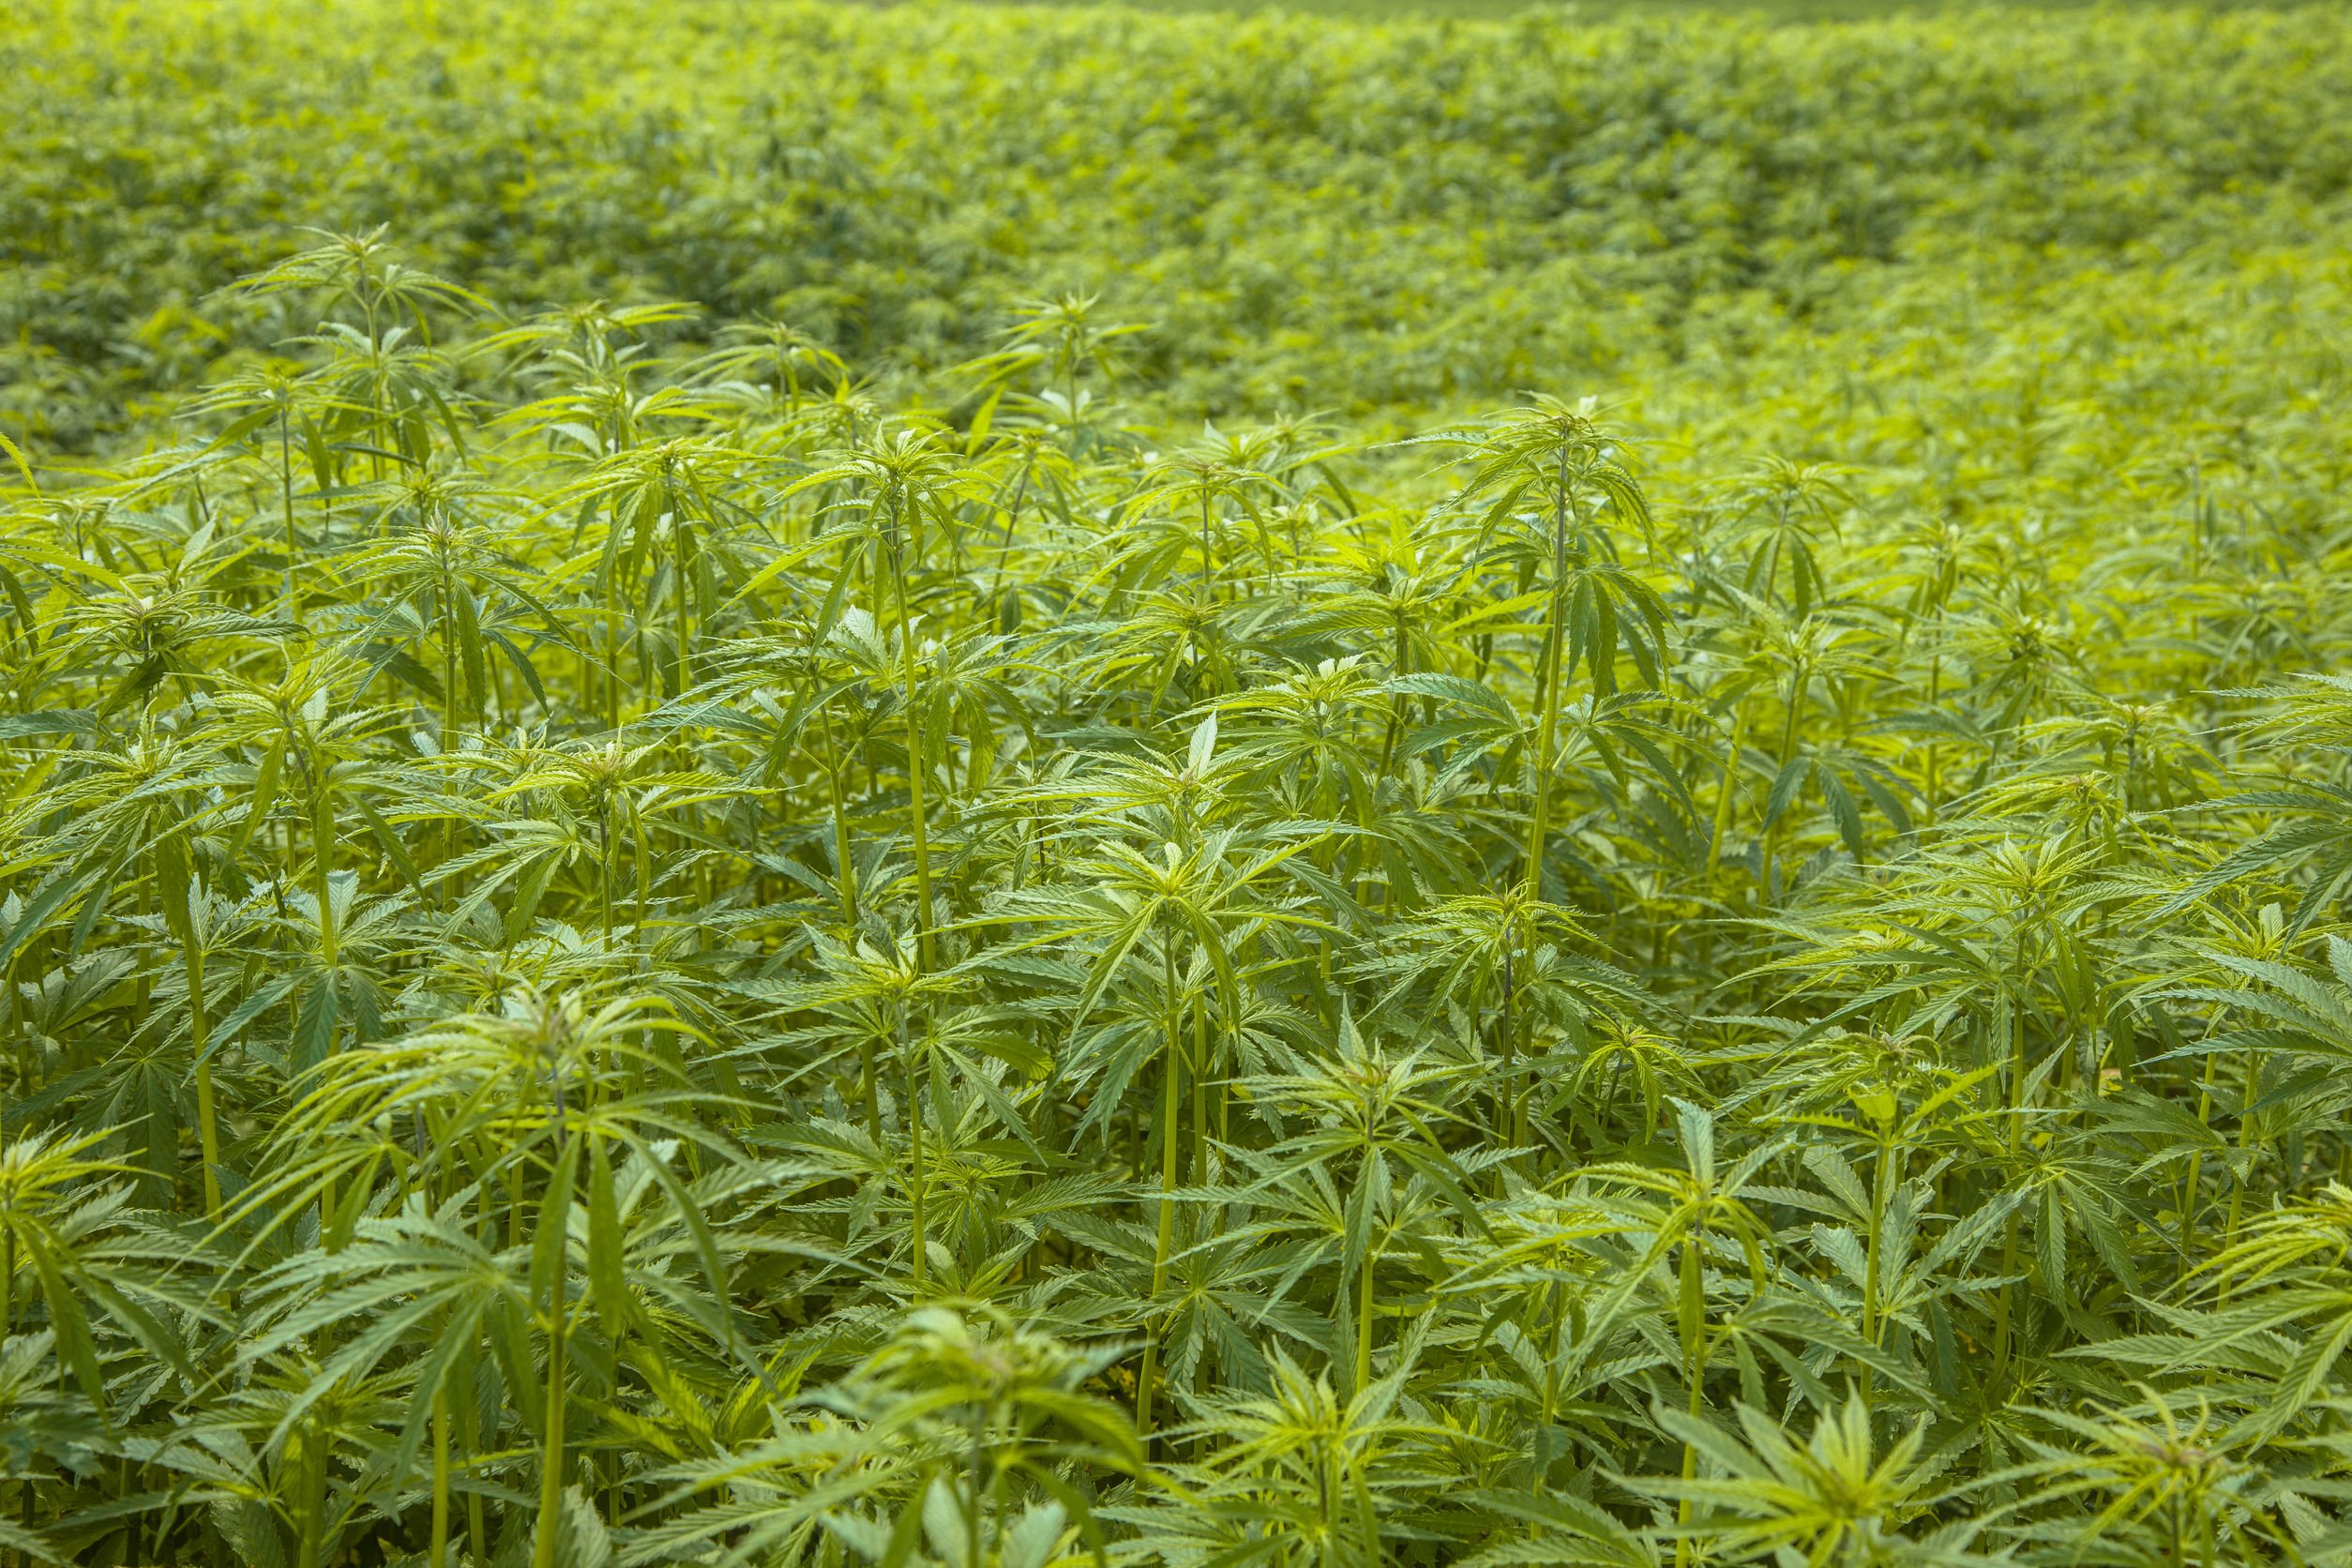 Hemp legalization: Shifts for the marijuana industry ahead